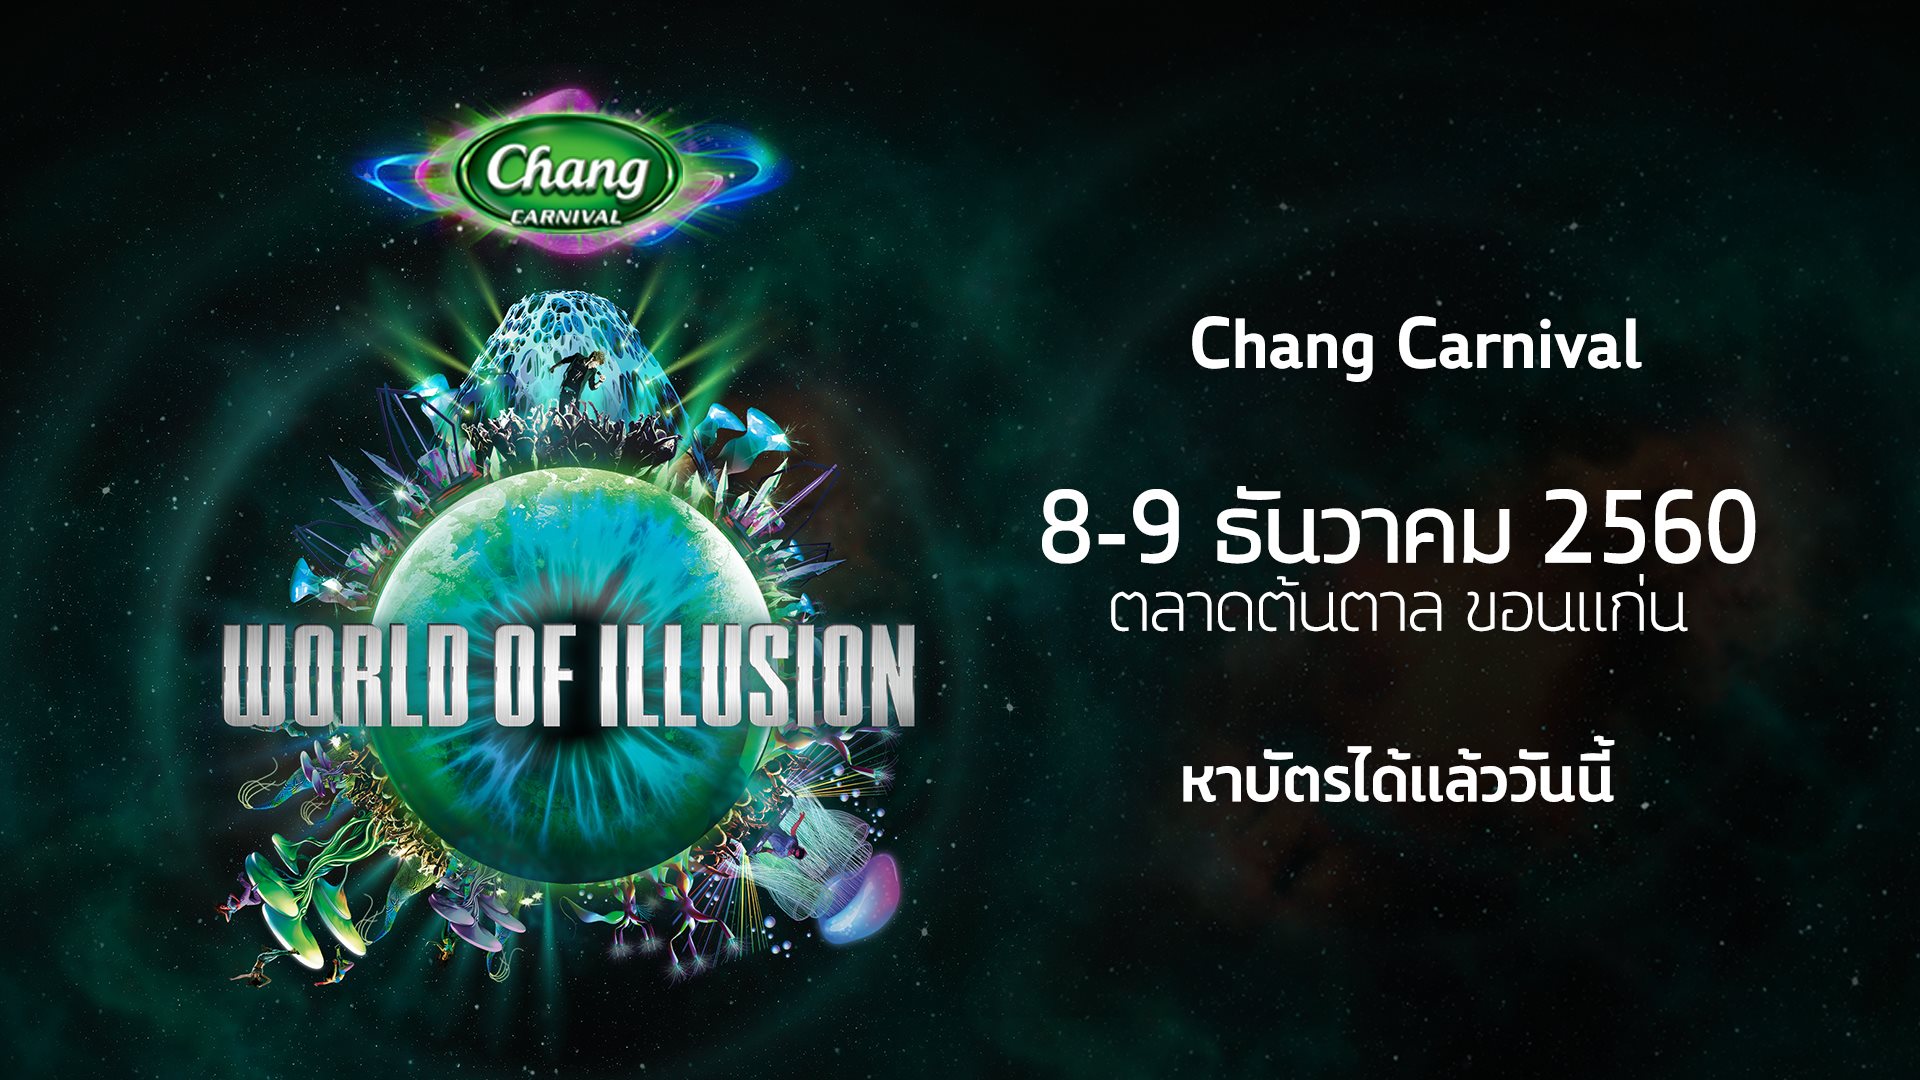 Chang Carnival World of Illusion ขอนแก่น 3